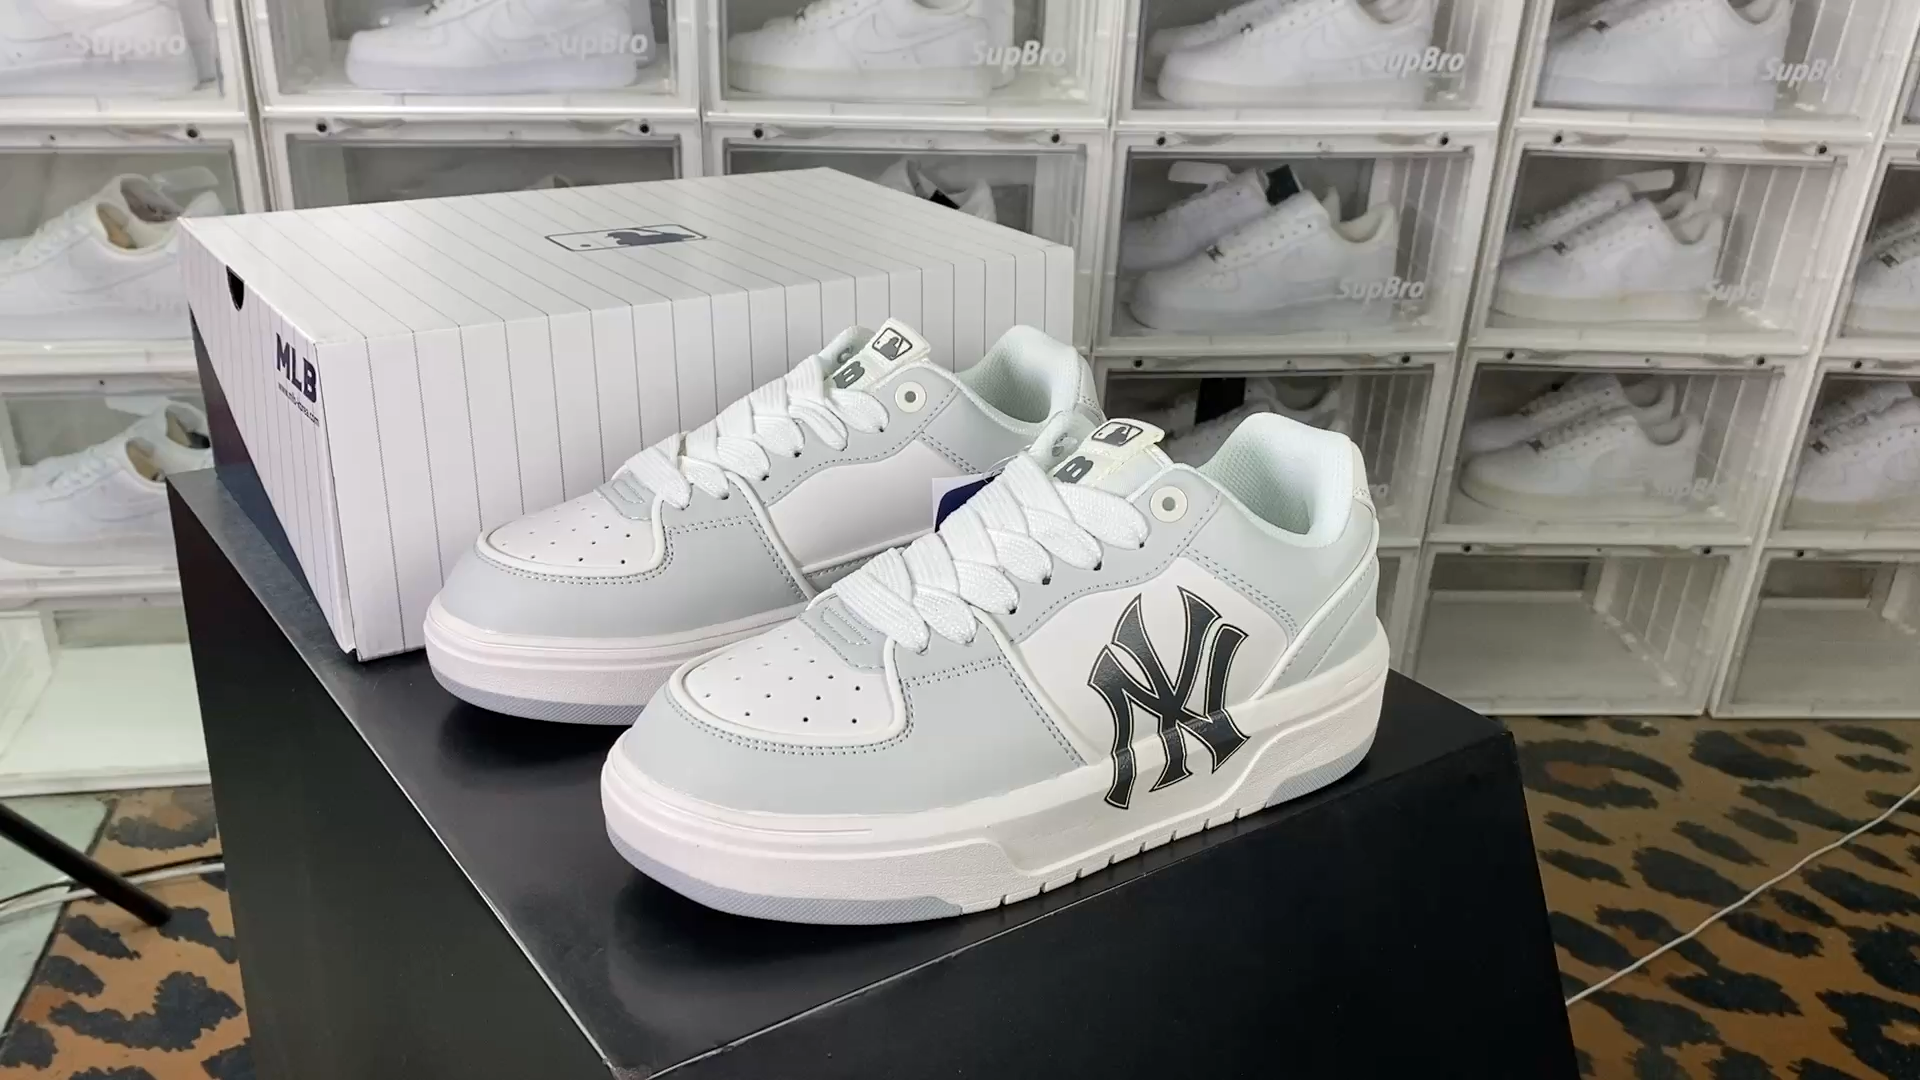 MLB Chunky Liner New York Yankees Shoes NY Baseball Sneakers White